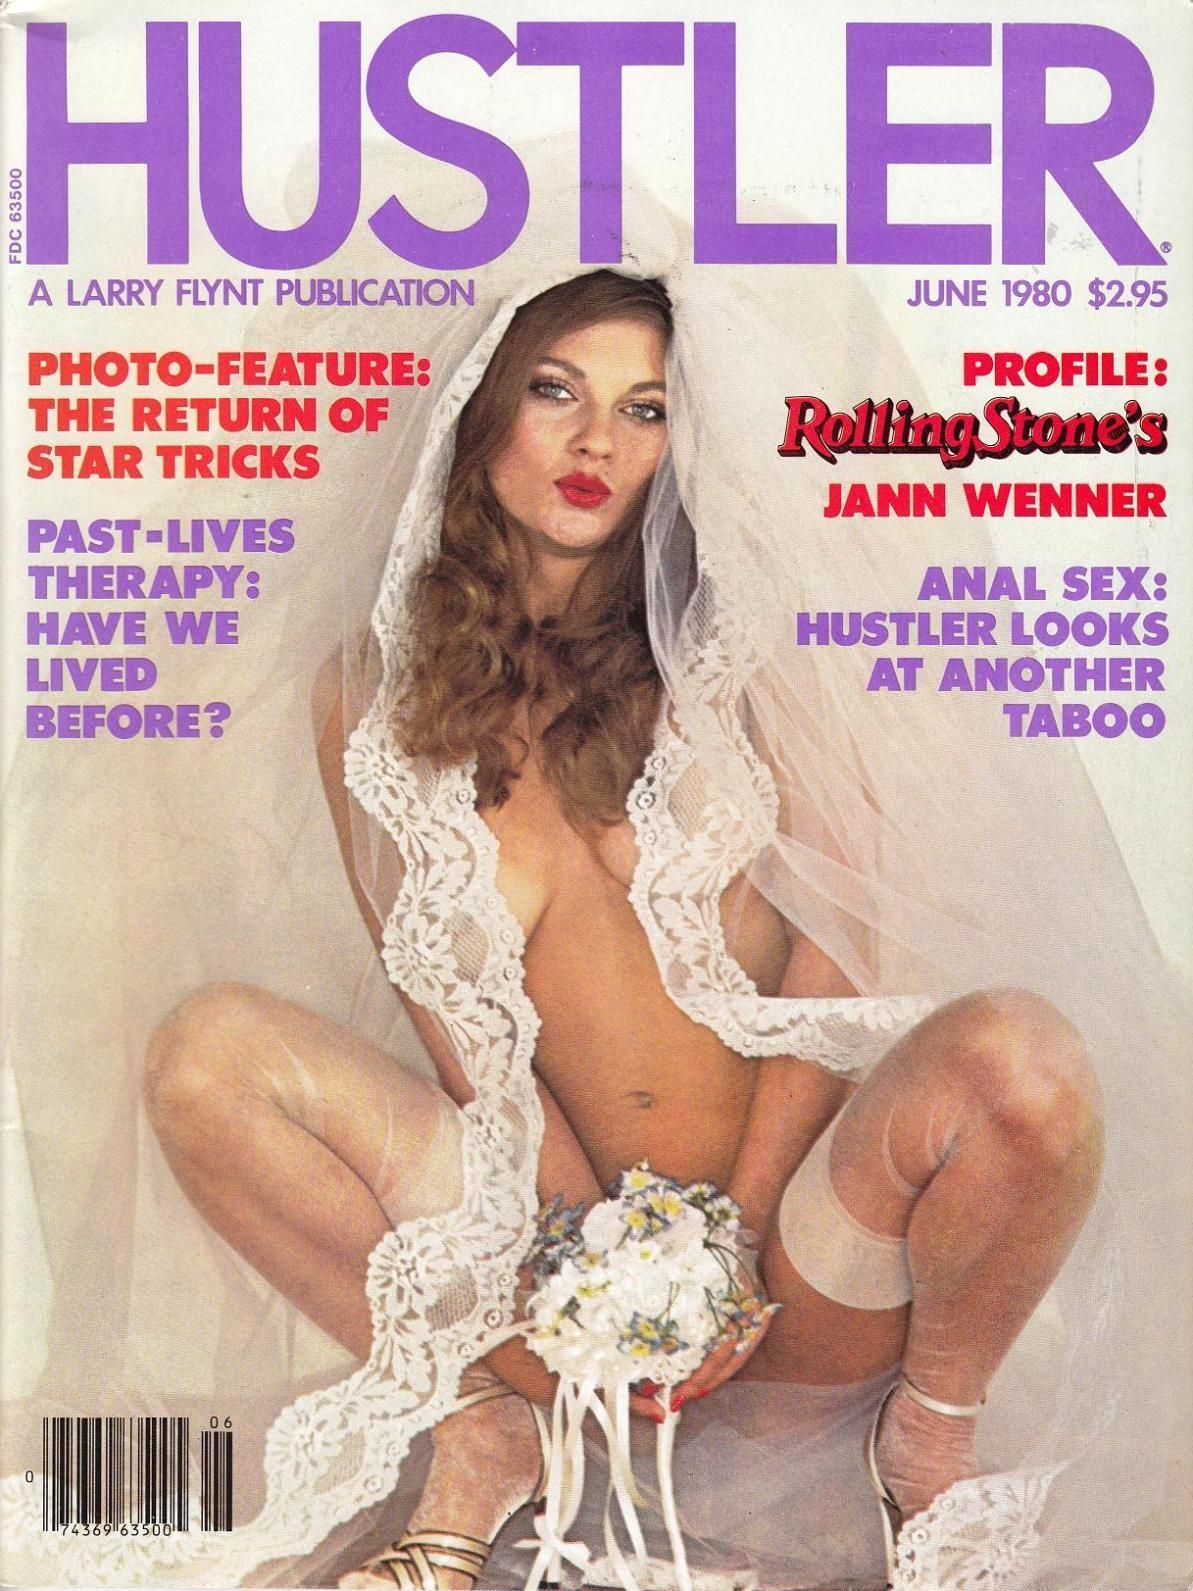 best of 1980 nude vintage photos honey hustler july